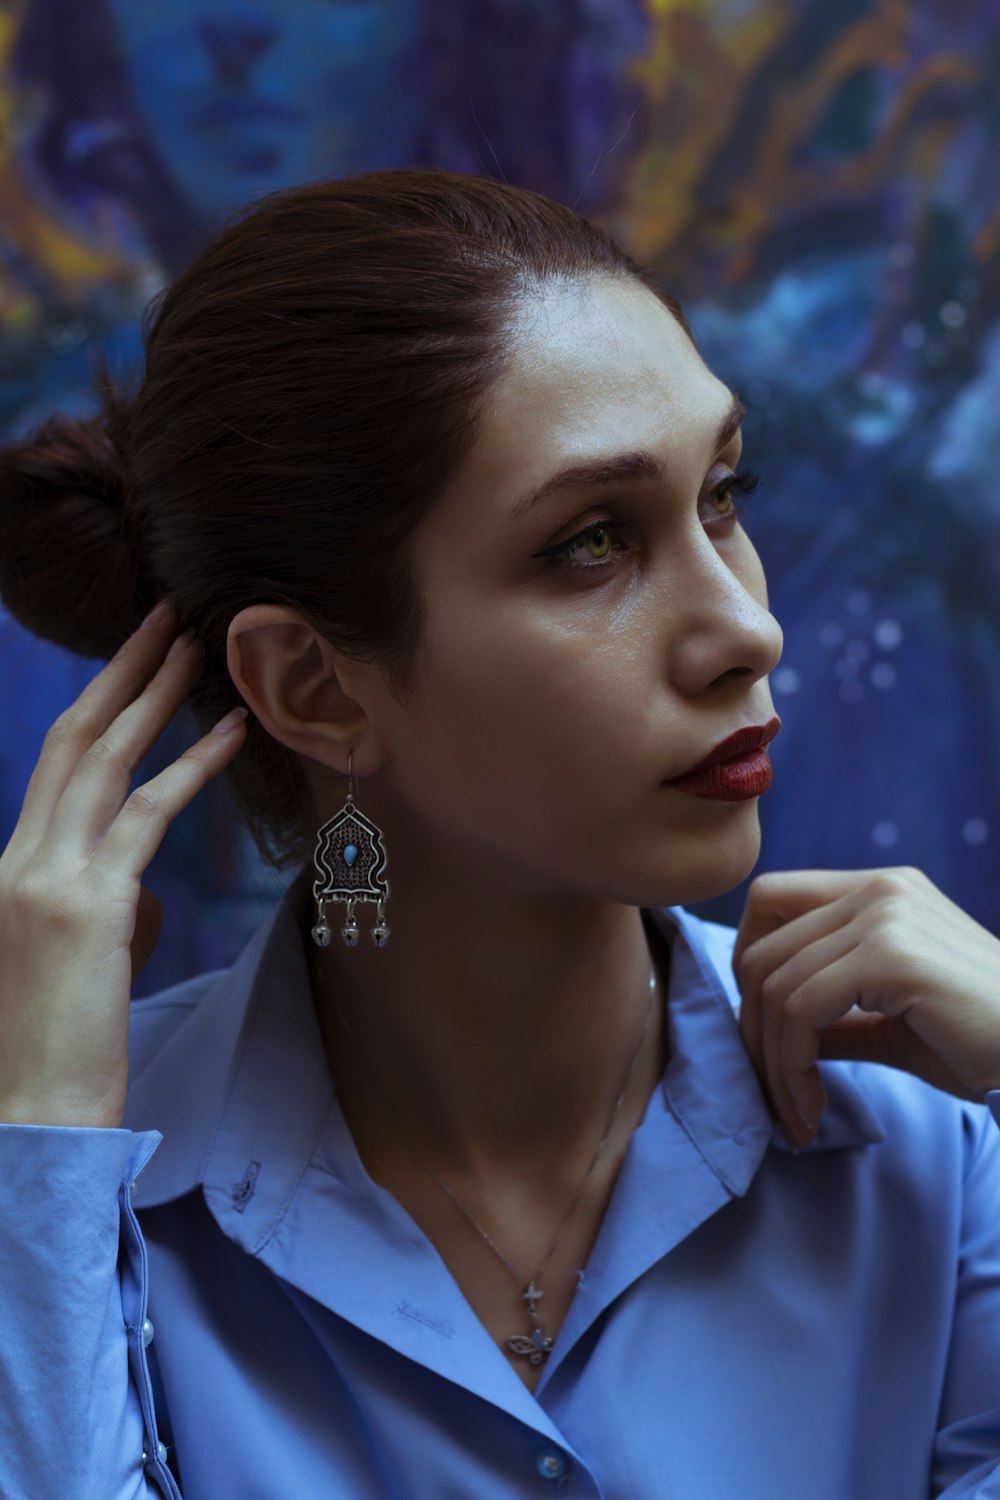 woman in blue collared shirt wearing silver earrings